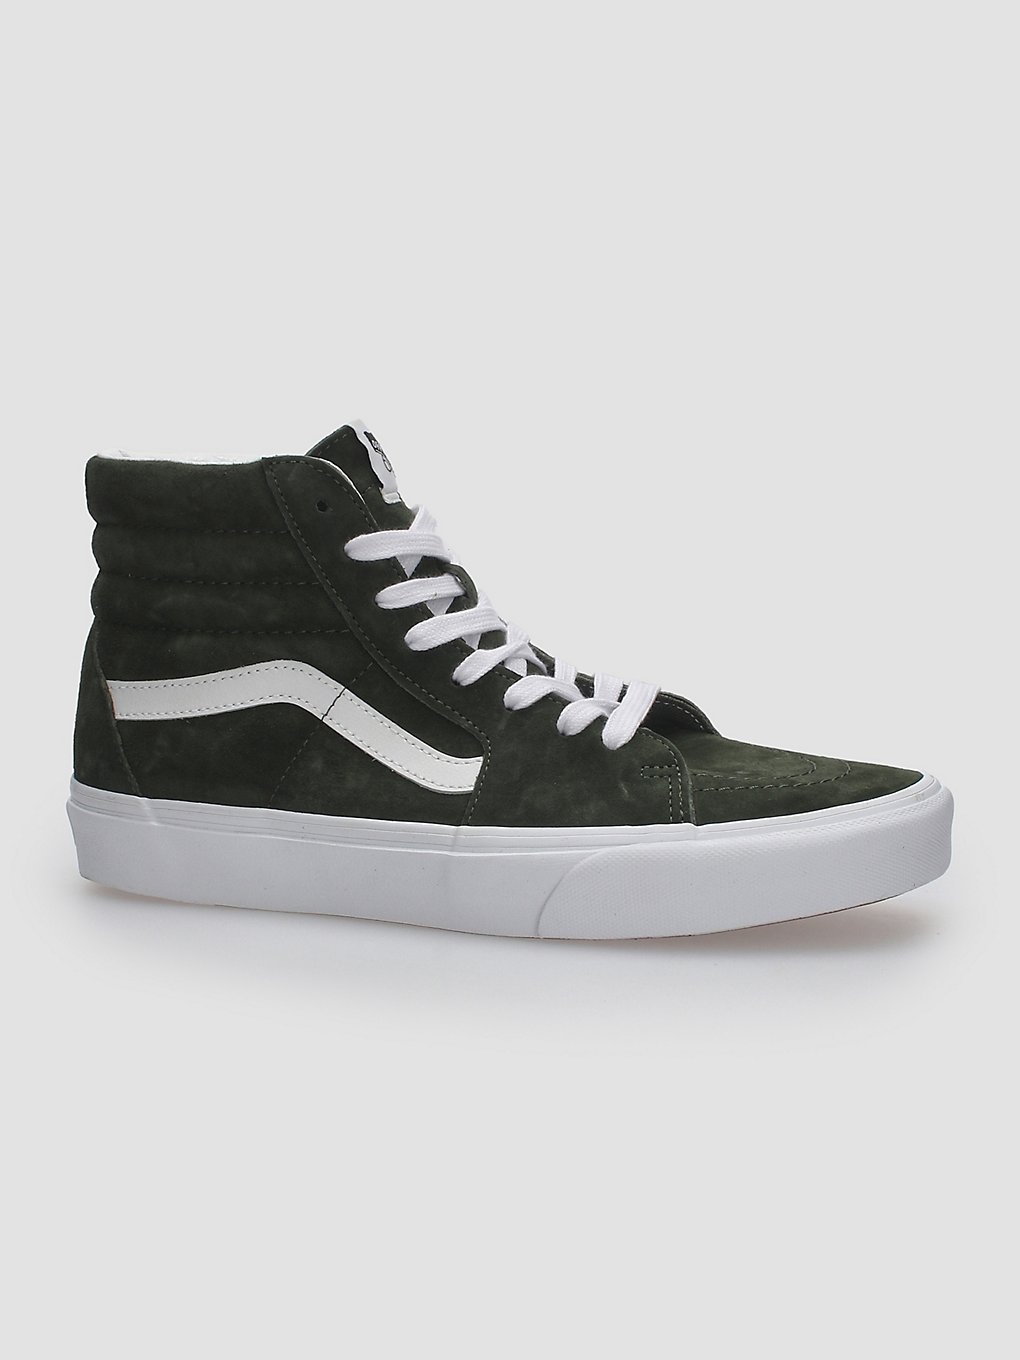 Vans Sk8-Hi Sneakers groen